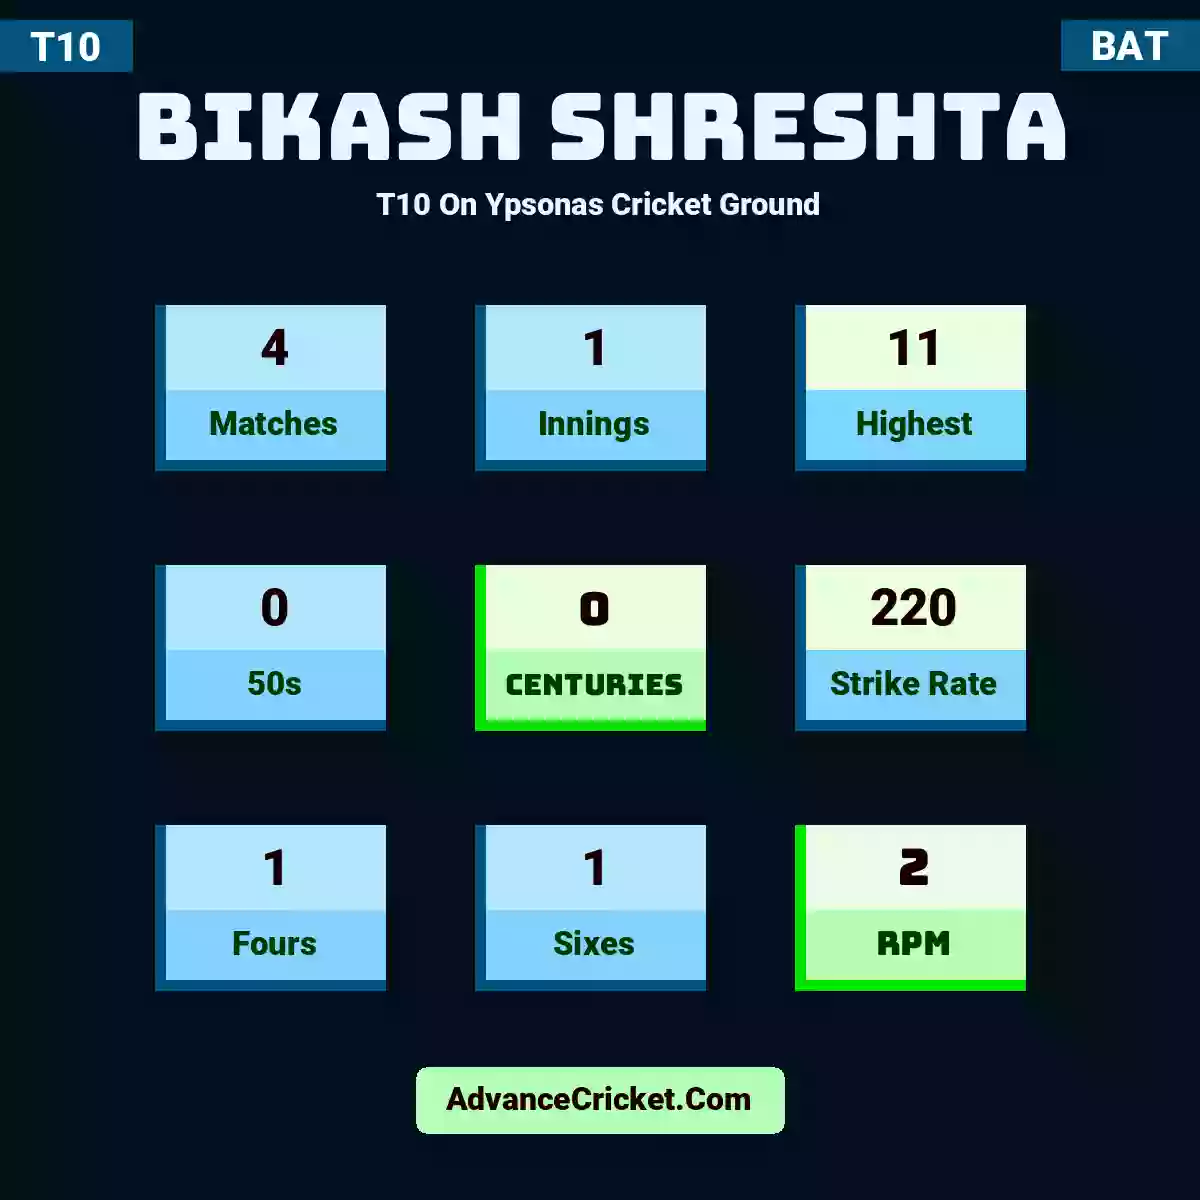 Bikash Shreshta T10  On Ypsonas Cricket Ground, Bikash Shreshta played 4 matches, scored 11 runs as highest, 0 half-centuries, and 0 centuries, with a strike rate of 220. B.Shreshta hit 1 fours and 1 sixes, with an RPM of 2.